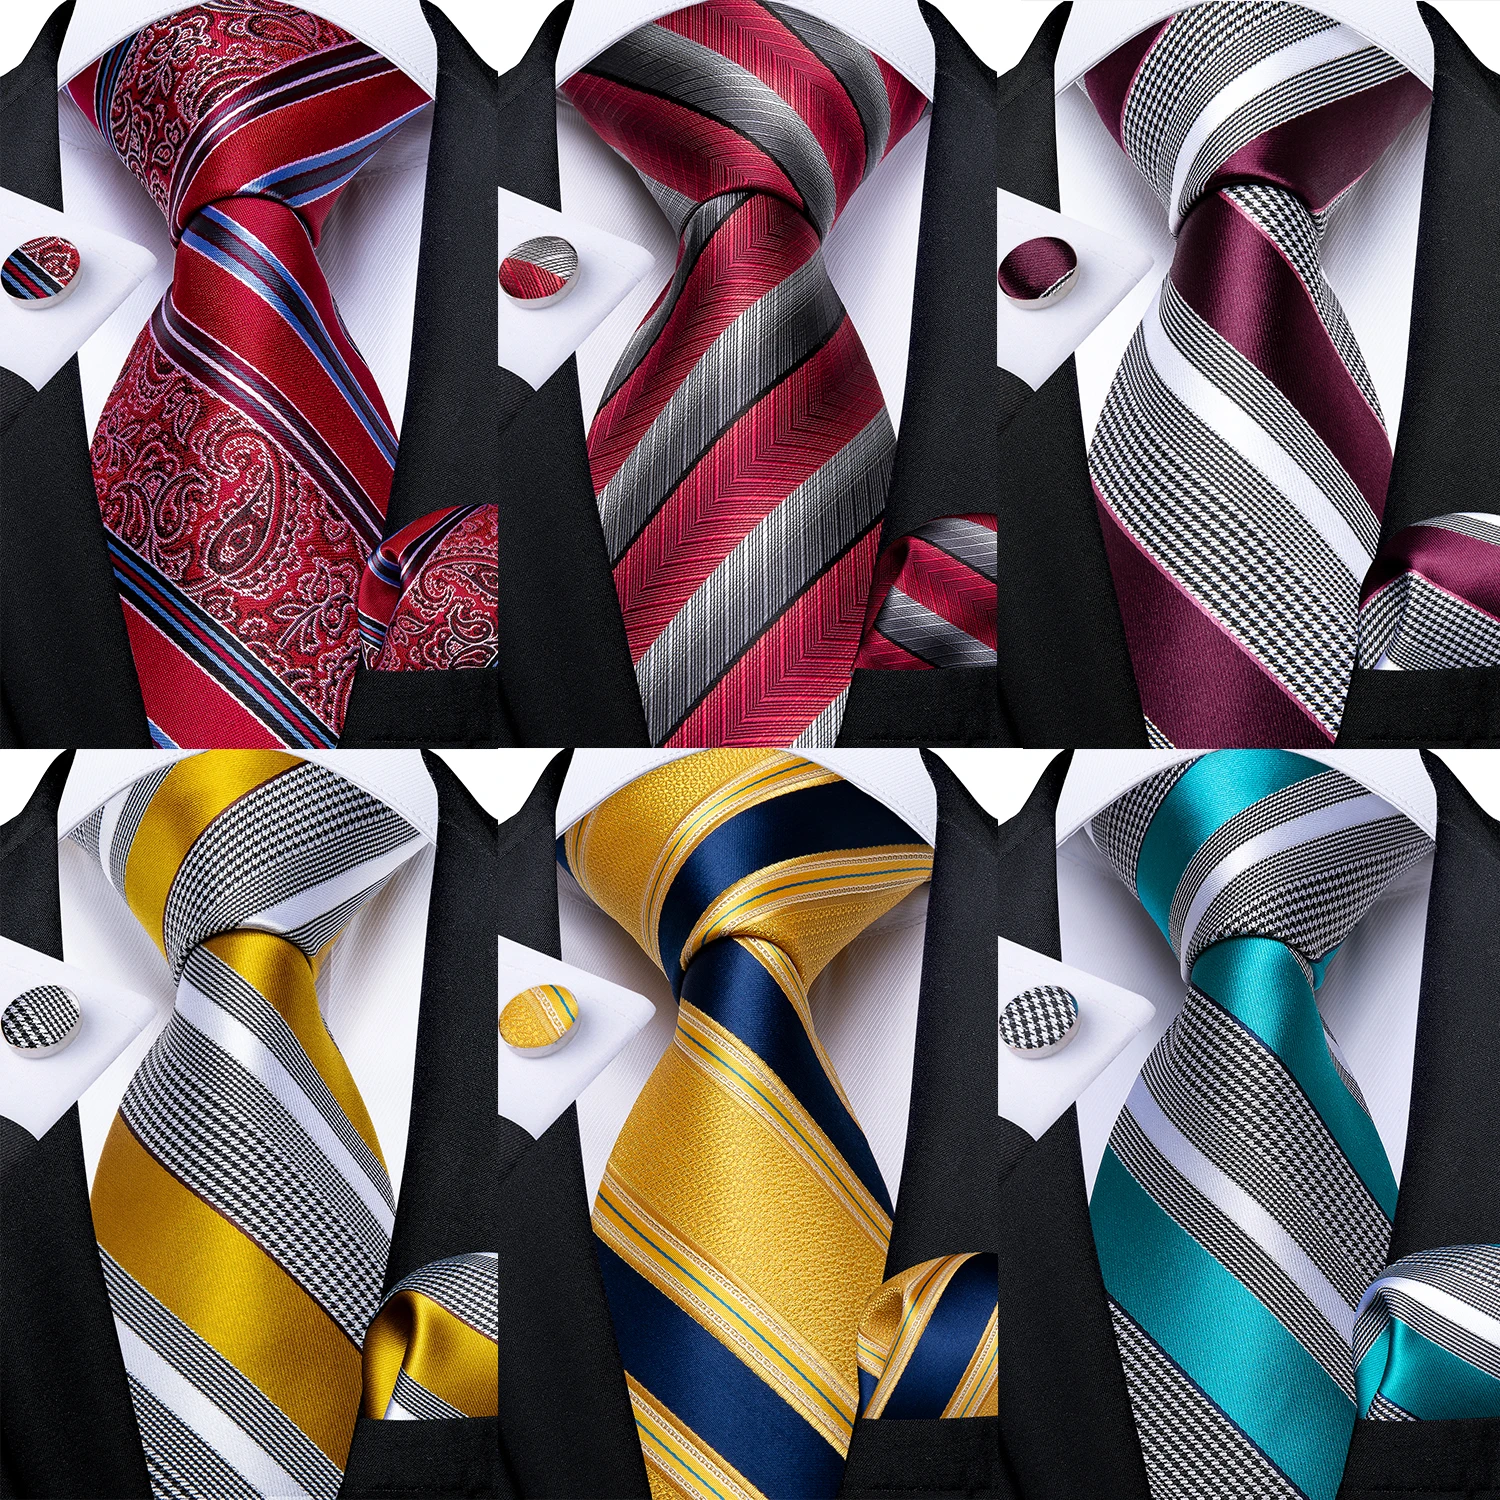 Classic Striped Men's Ties 8cm 100% Silk Red Blue Yellow Necktie Formal Business Wedding Tie Set Cravat Gift For Men DiBanGu